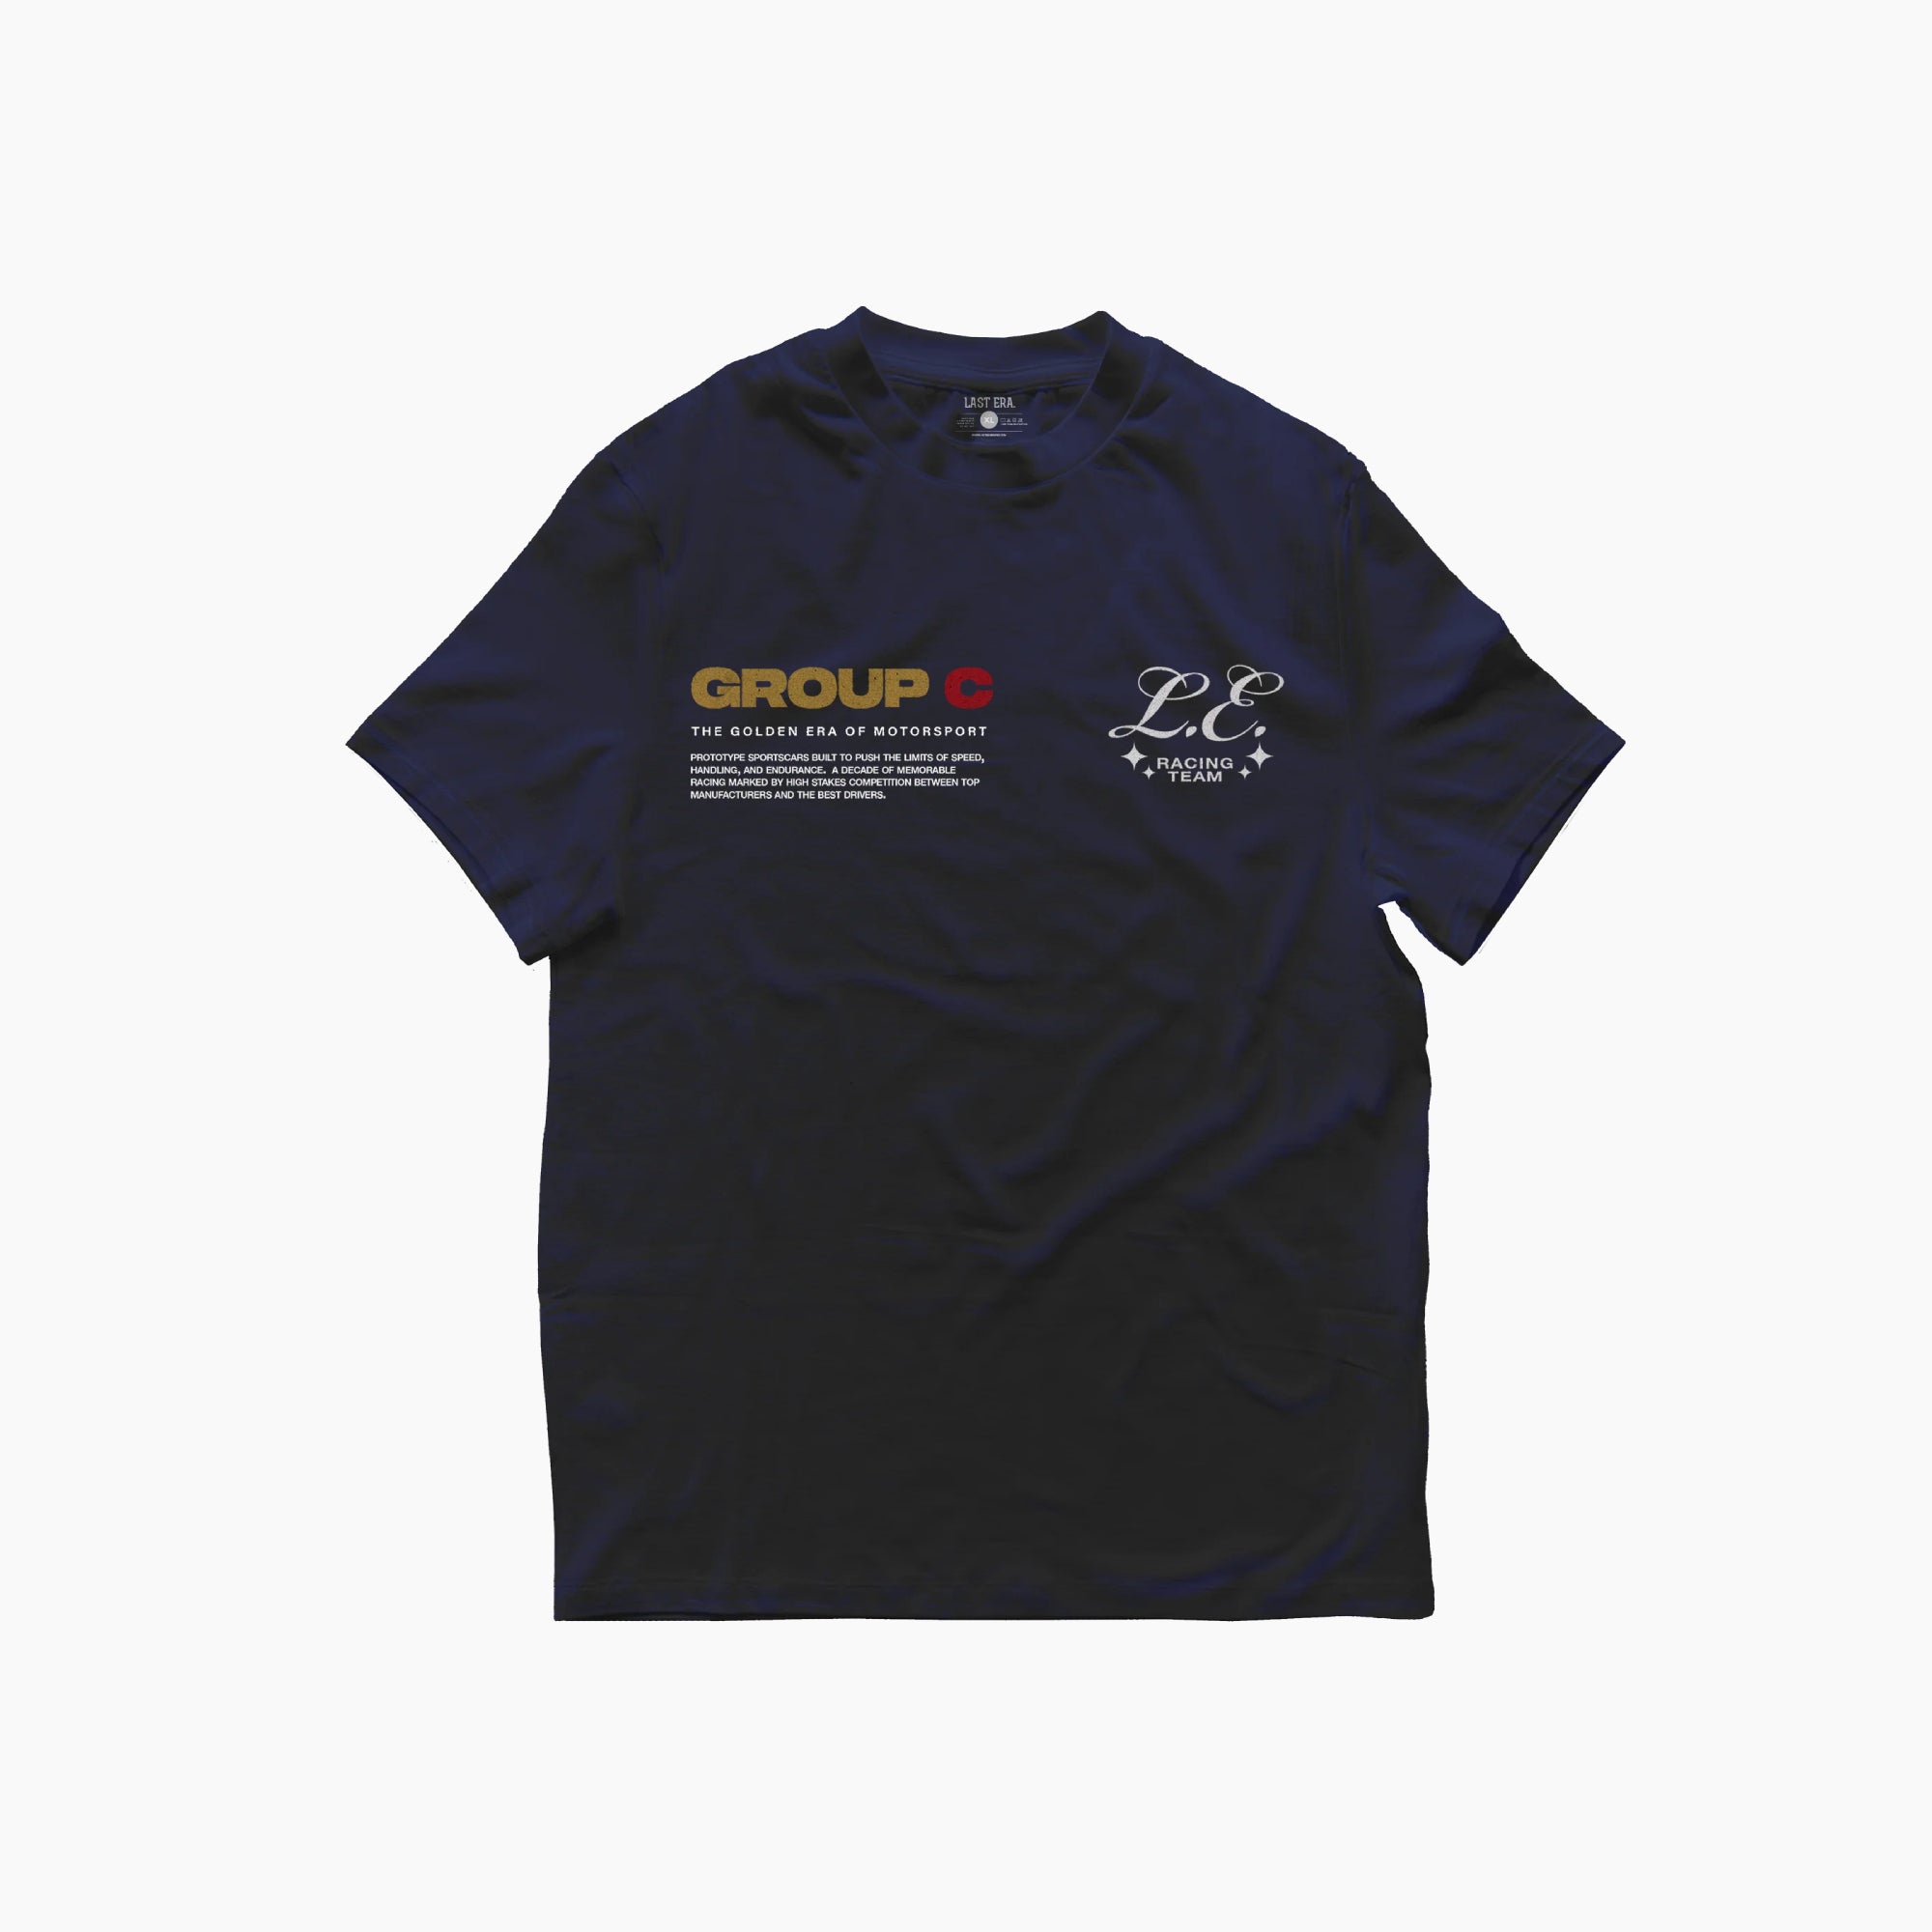 Last Era | Group C T-Shirt-T-Shirt-Last Era-gpx-store